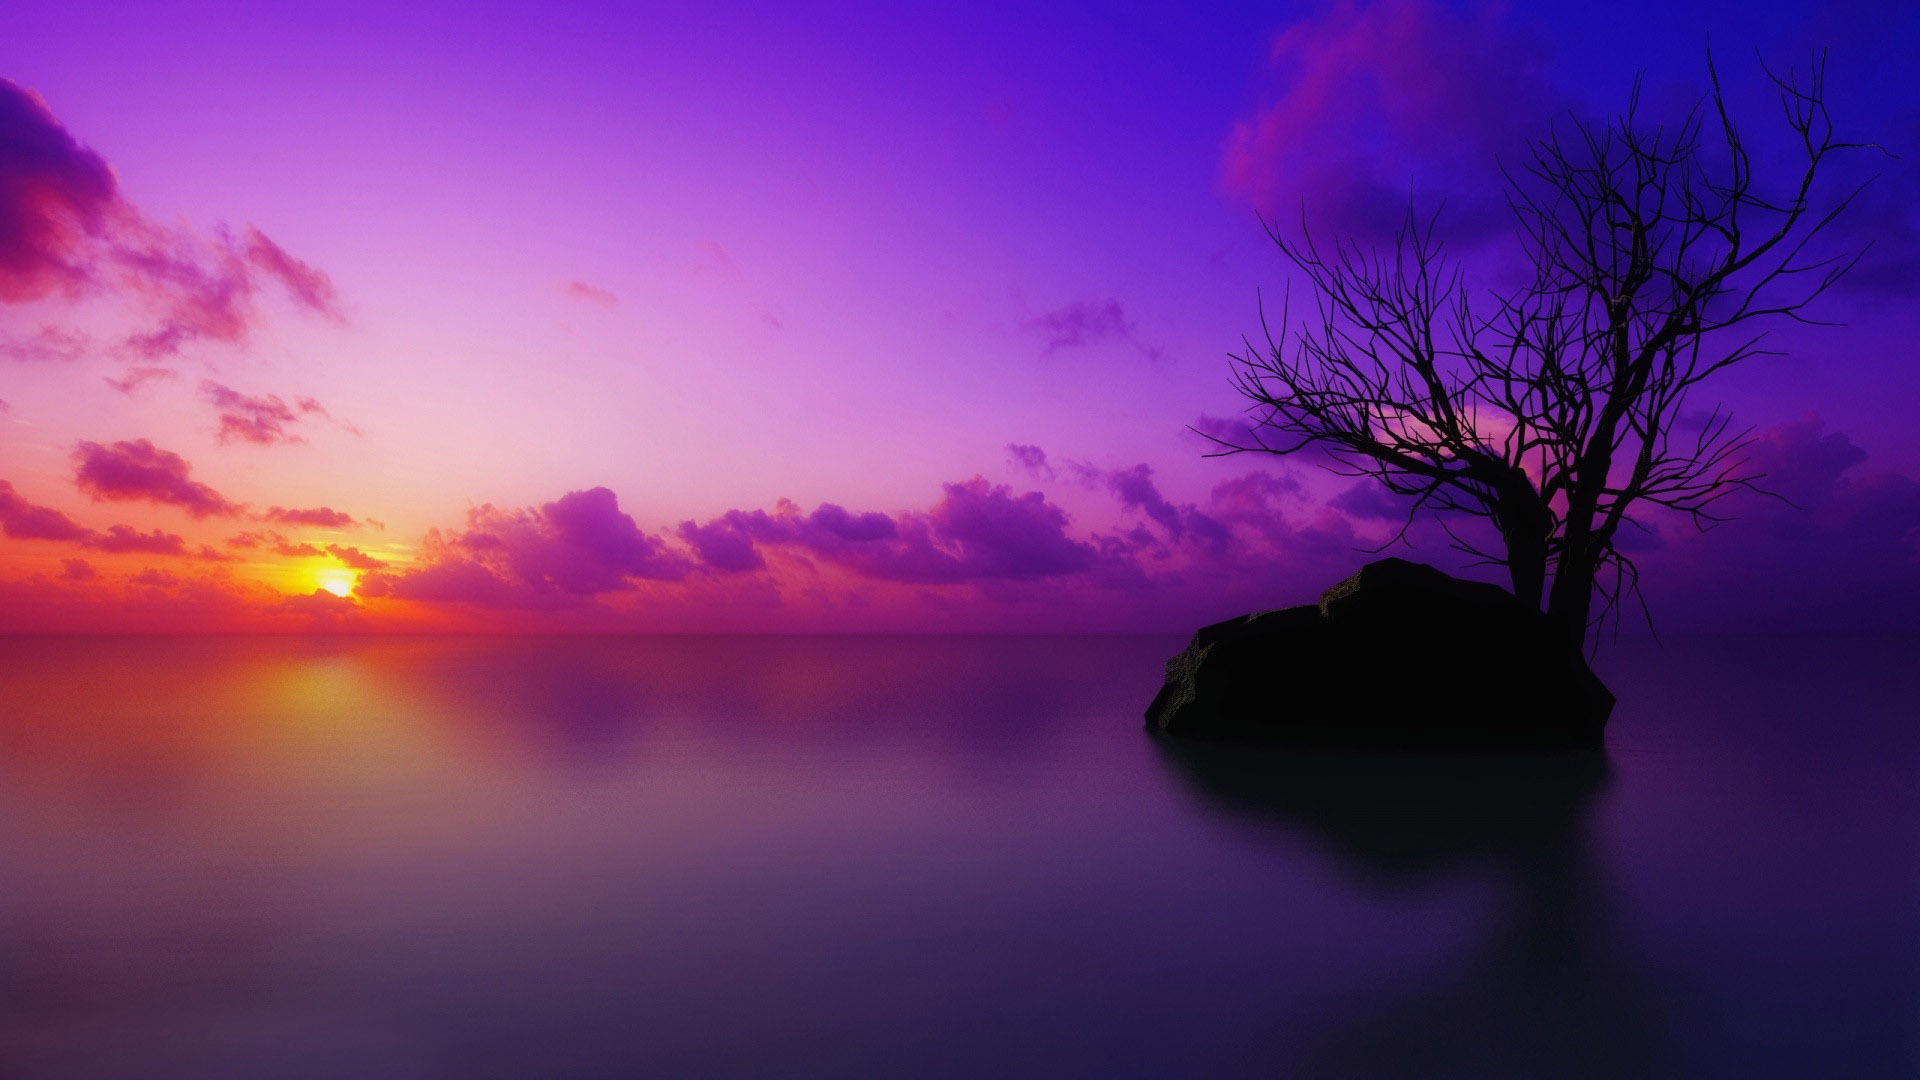 HD Purple Sunset 23188 1920x1080px